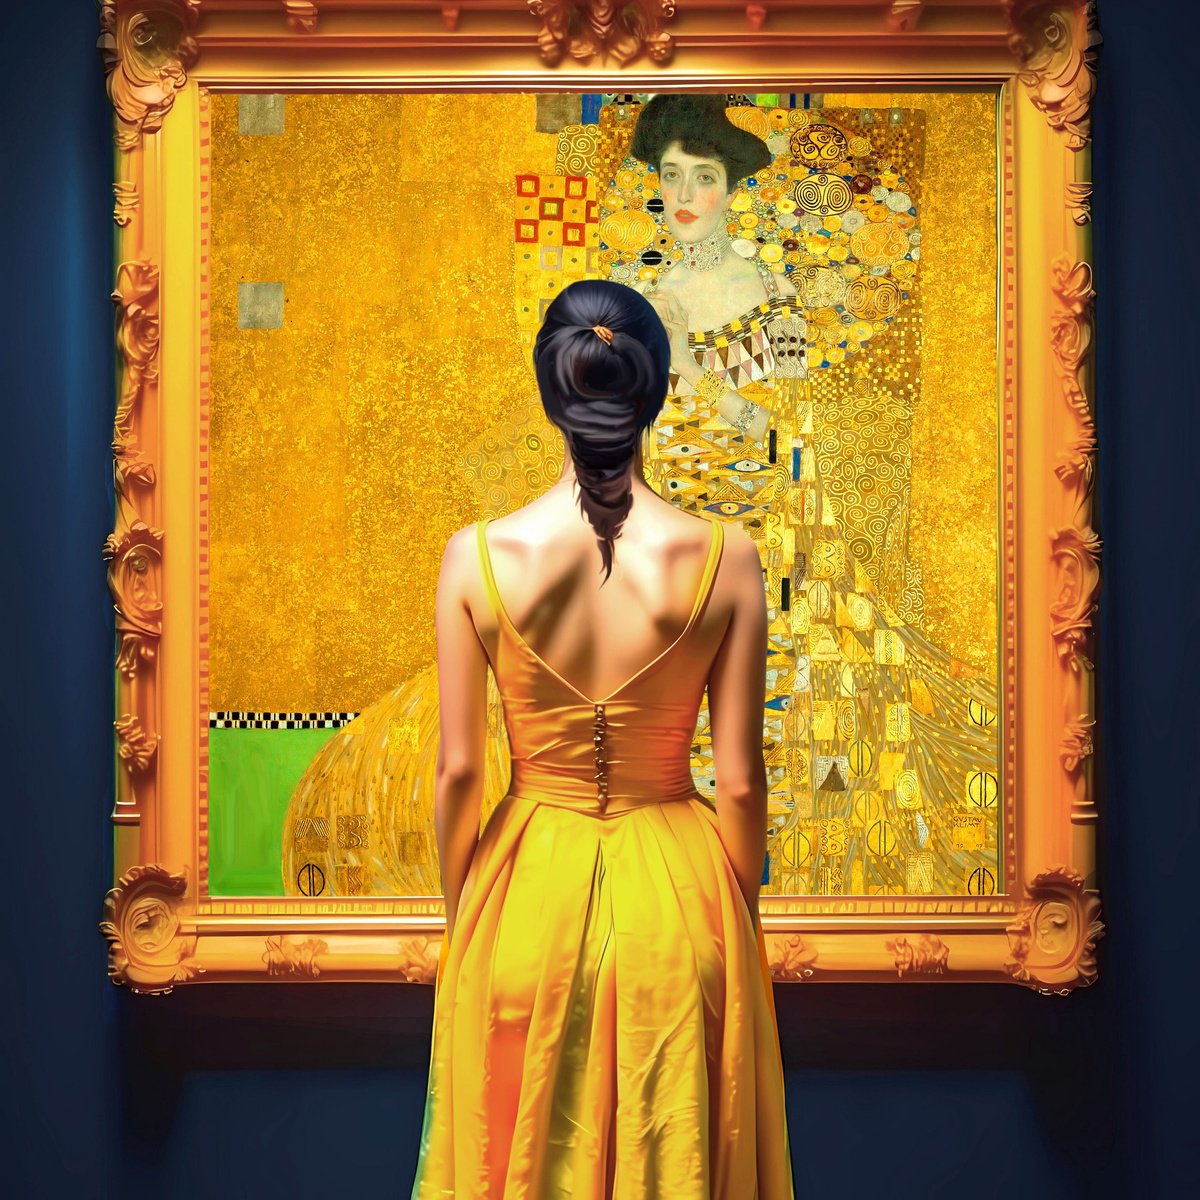 Woman in museum with Klimt Adele Bloch-Bauer - faceless portrait woman art, Gift by BAST